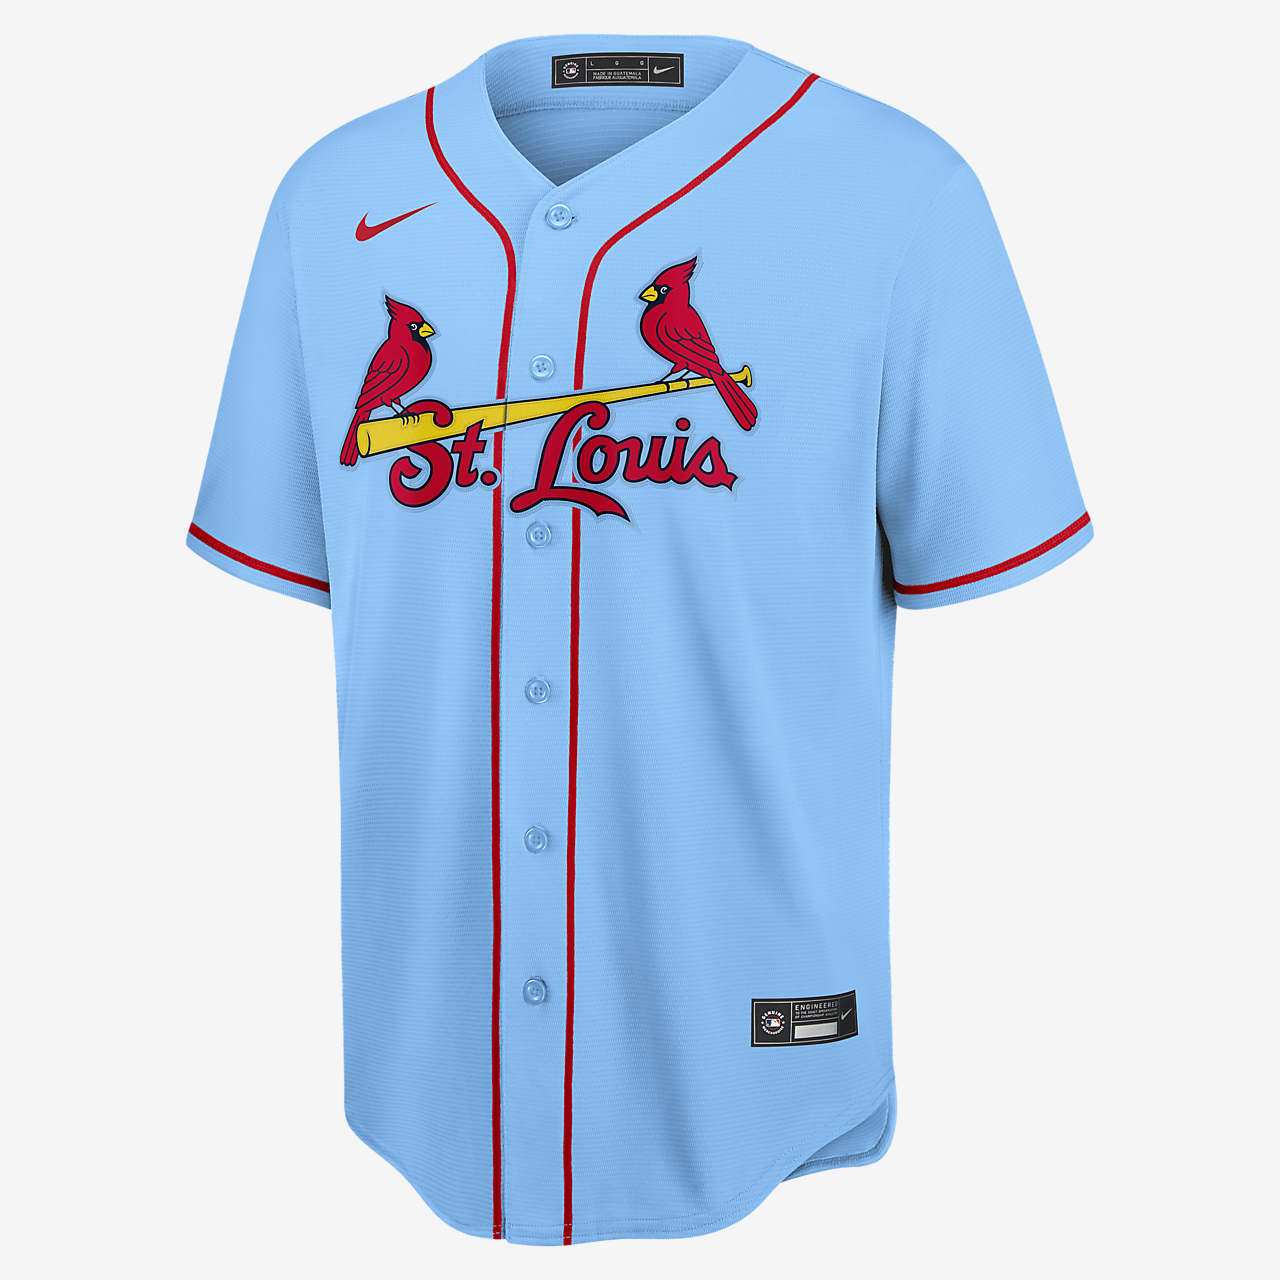 Jersey de béisbol Replica para hombre MLB St. Louis Cardinals (Paul